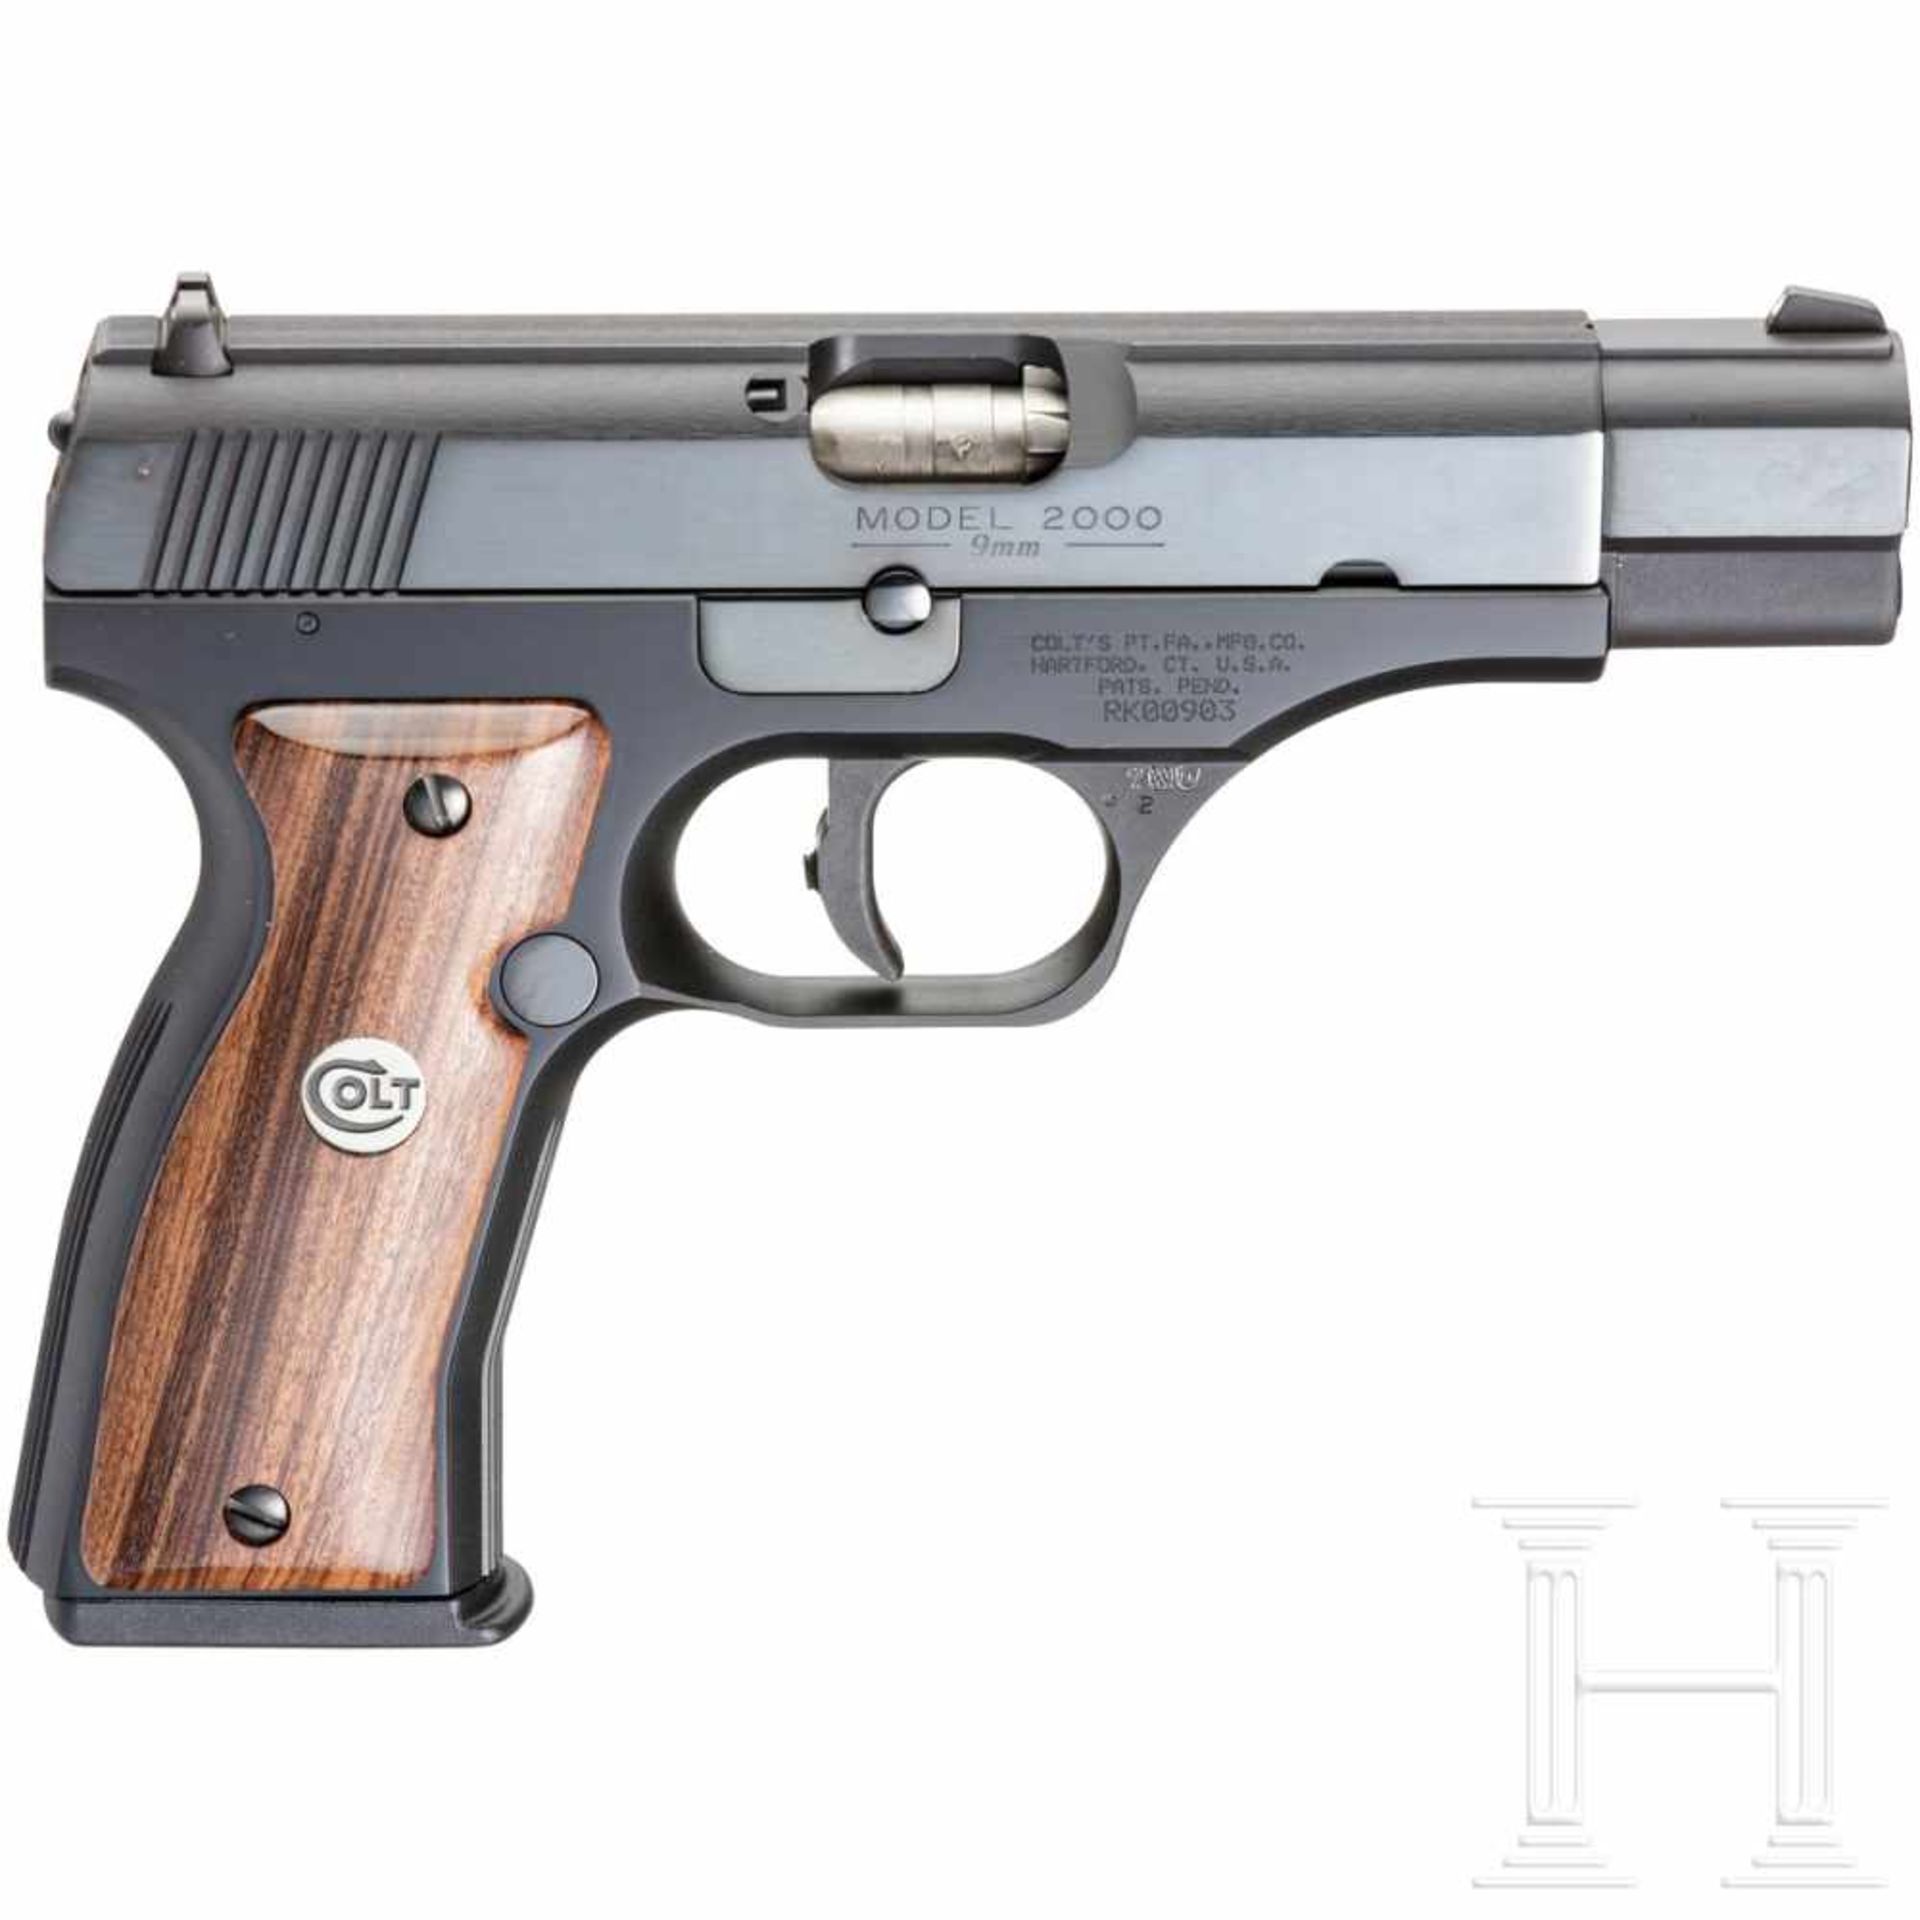 Colt All American, First Edition, Mod. 2000, im KofferKal. 9 mm Luger, Nr. RK00903, Blanker Lauf, - Bild 2 aus 2